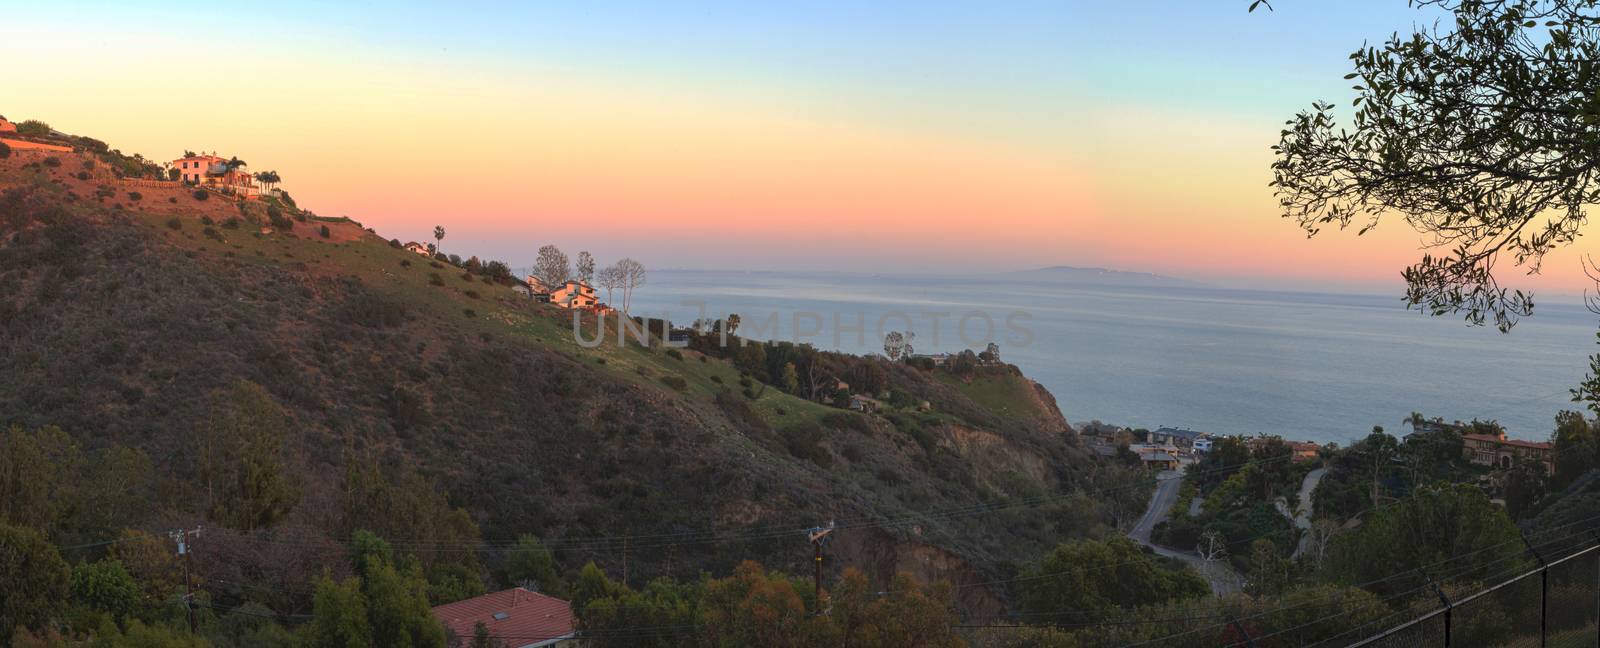 Malibu hillside at sunset by steffstarr